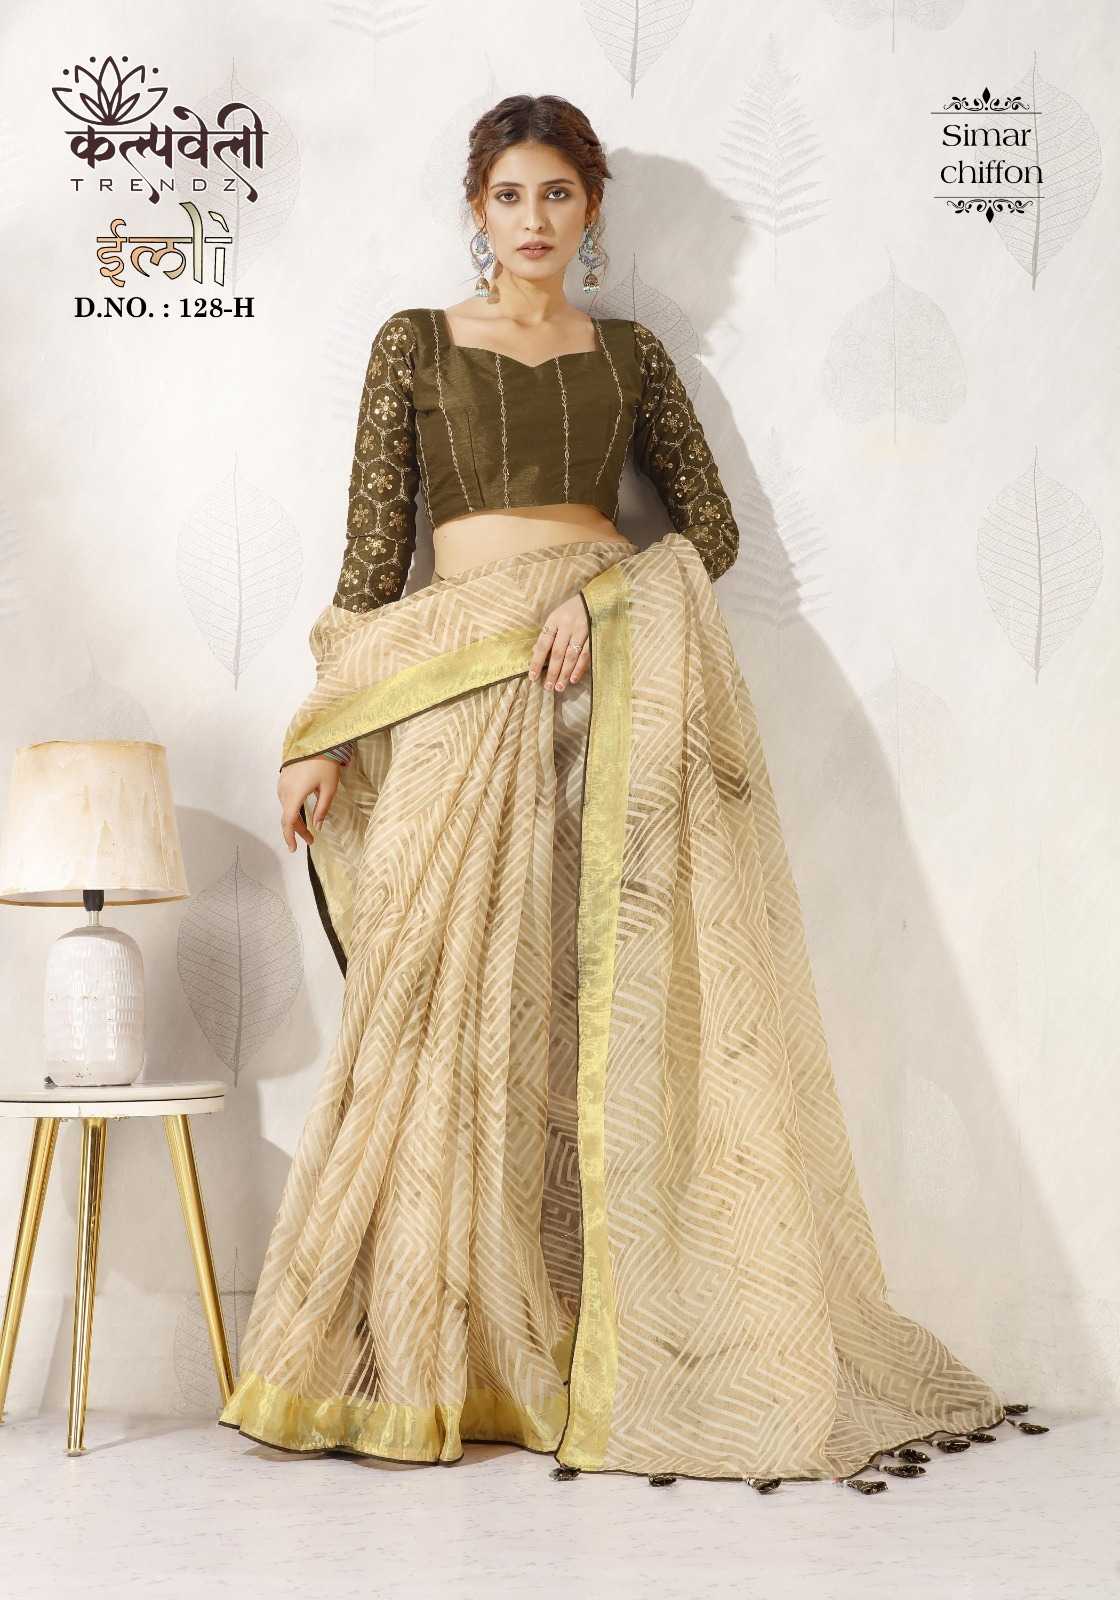 kalpavelly trendz imli 128 fancy chiffon sarees latest collection